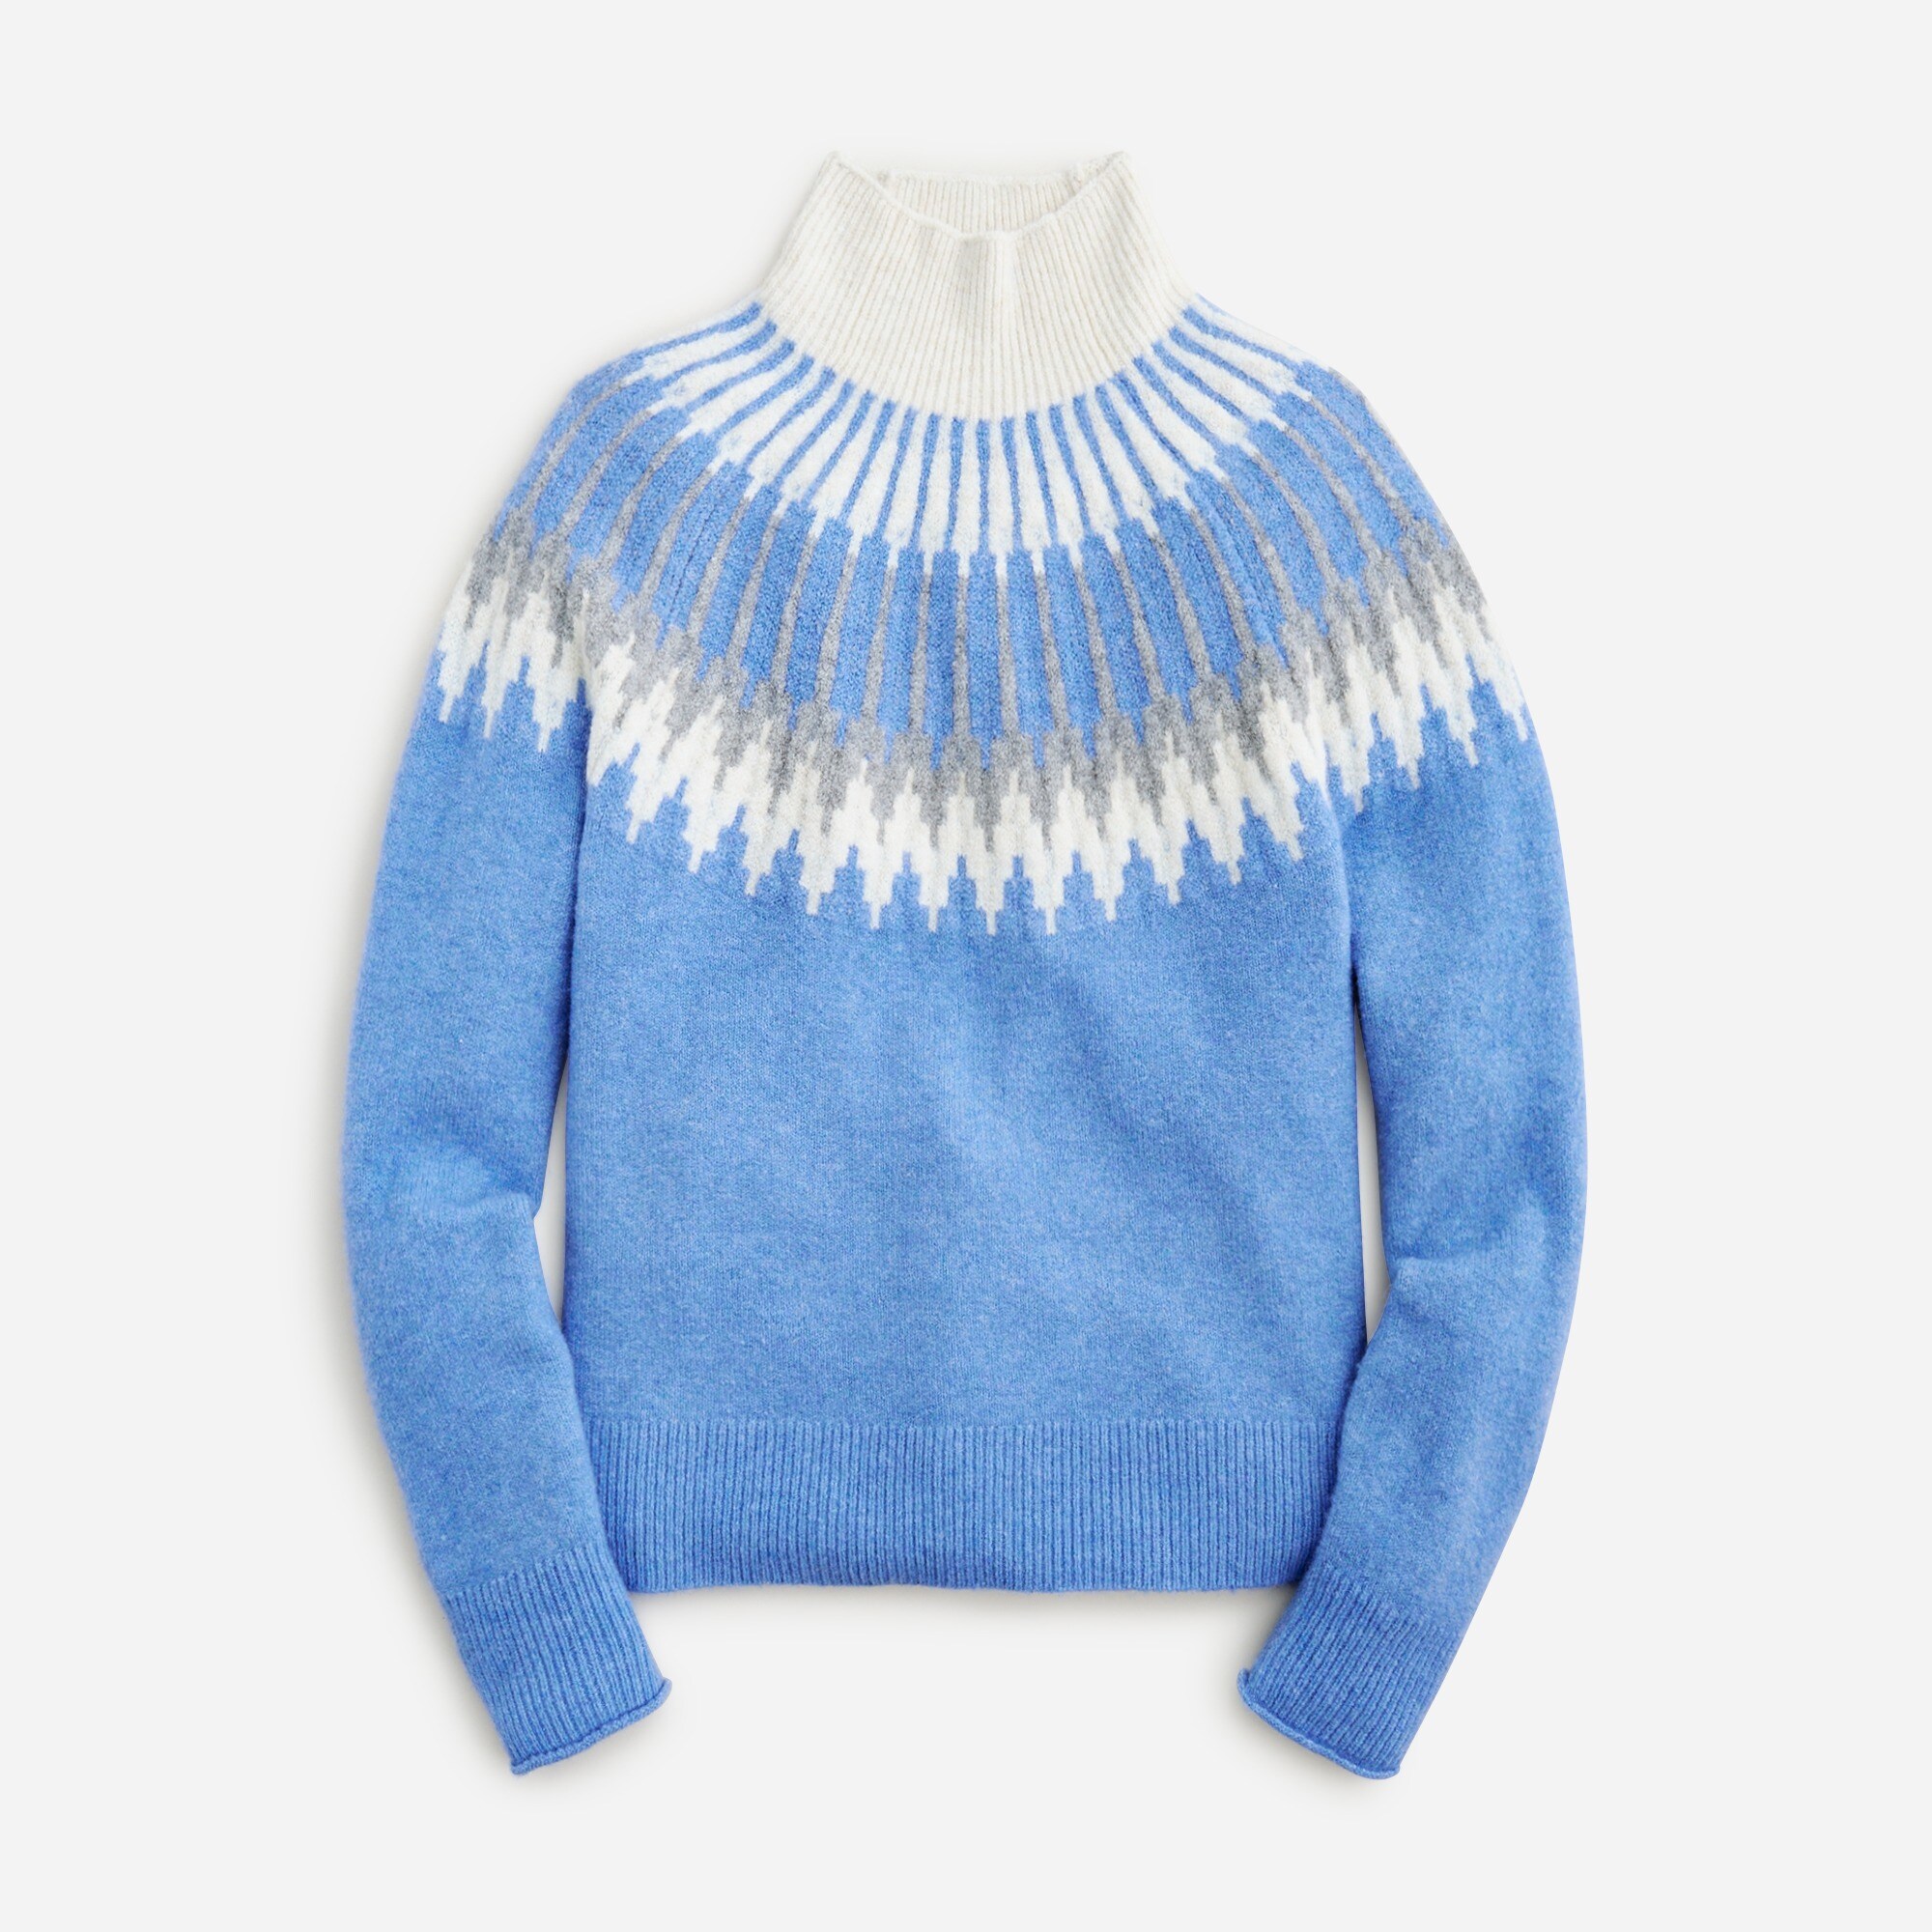  Fair Isle turtleneck sweater in Supersoft yarn